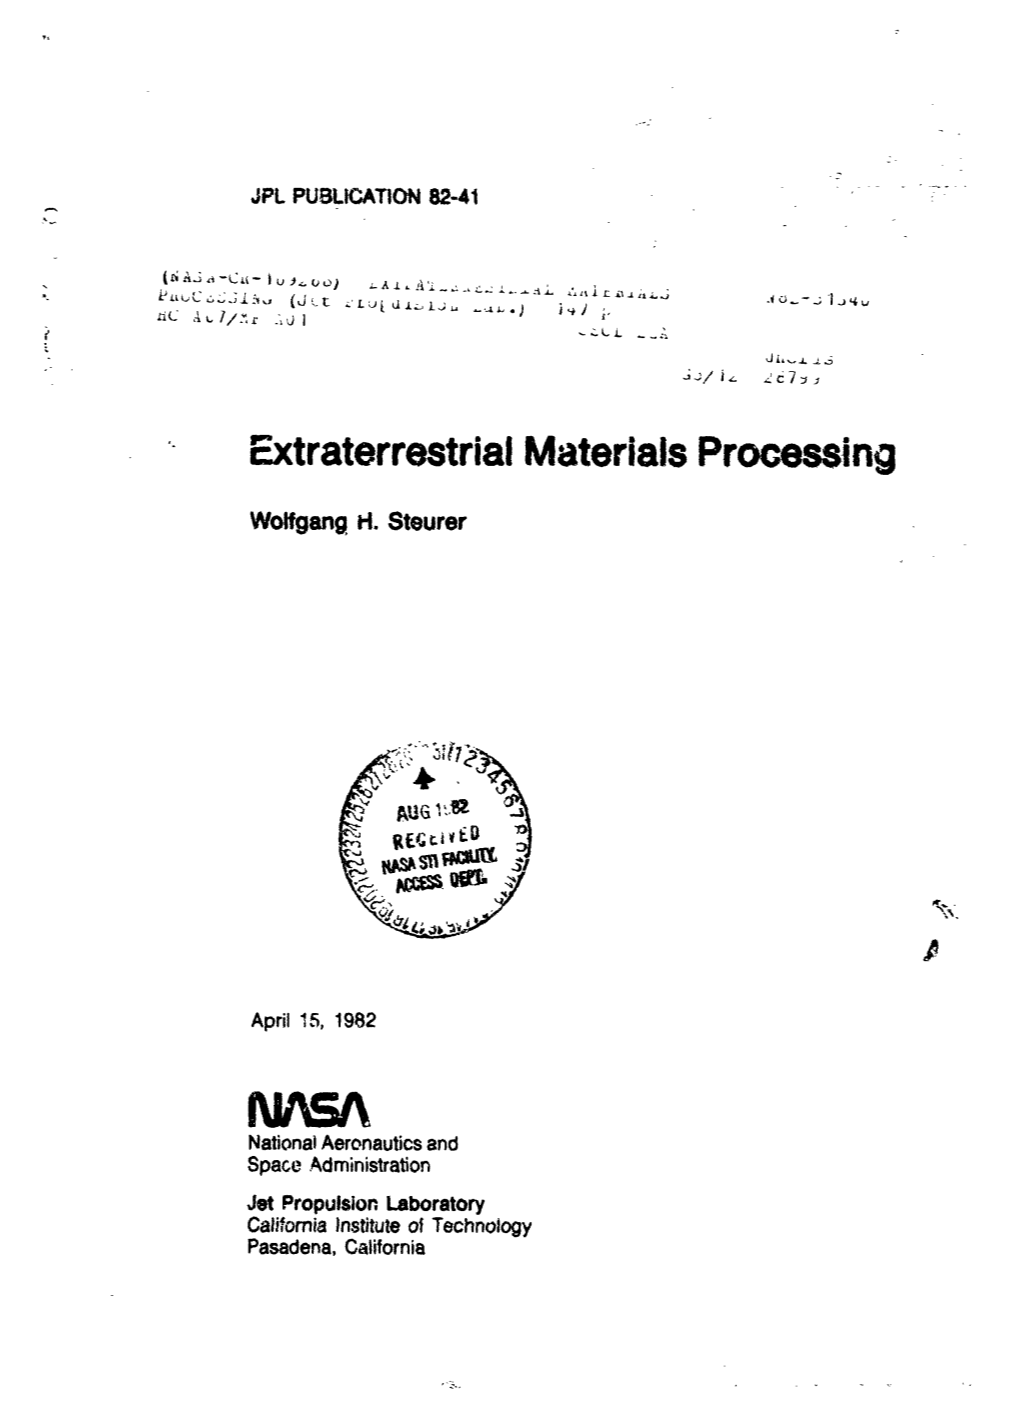 Extraterrestrial Materials Processing